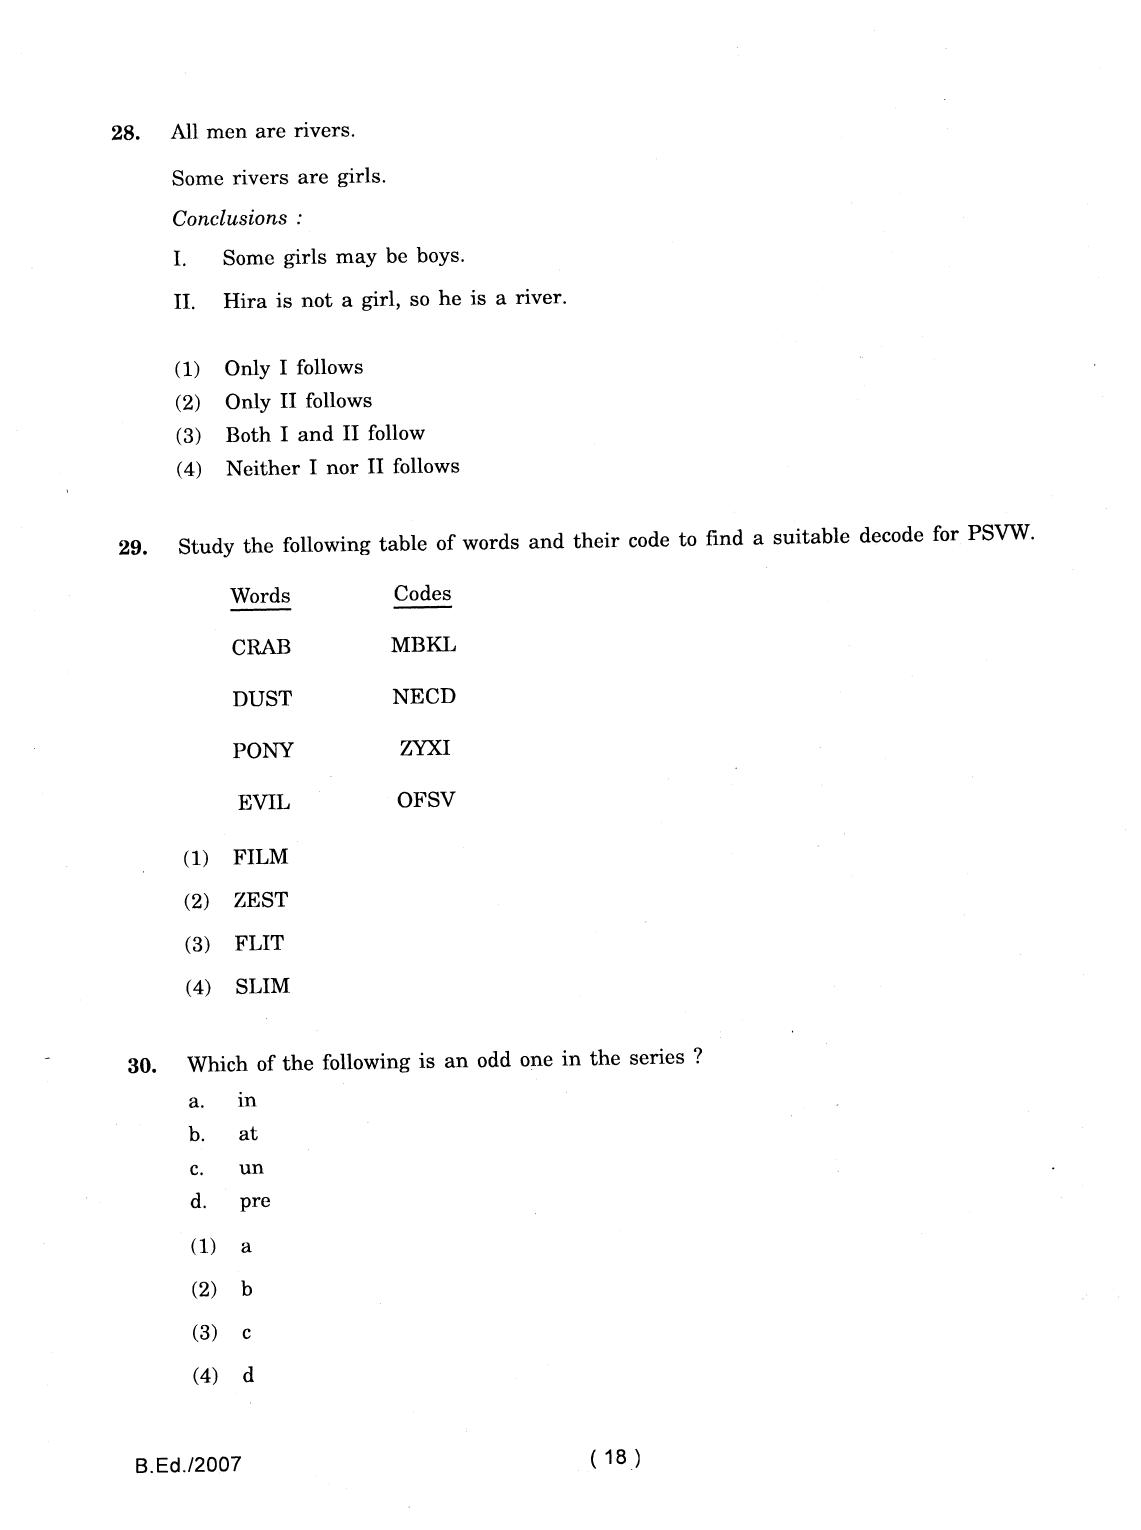 IGNOU B.Ed 2007 Question Paper - Page 18